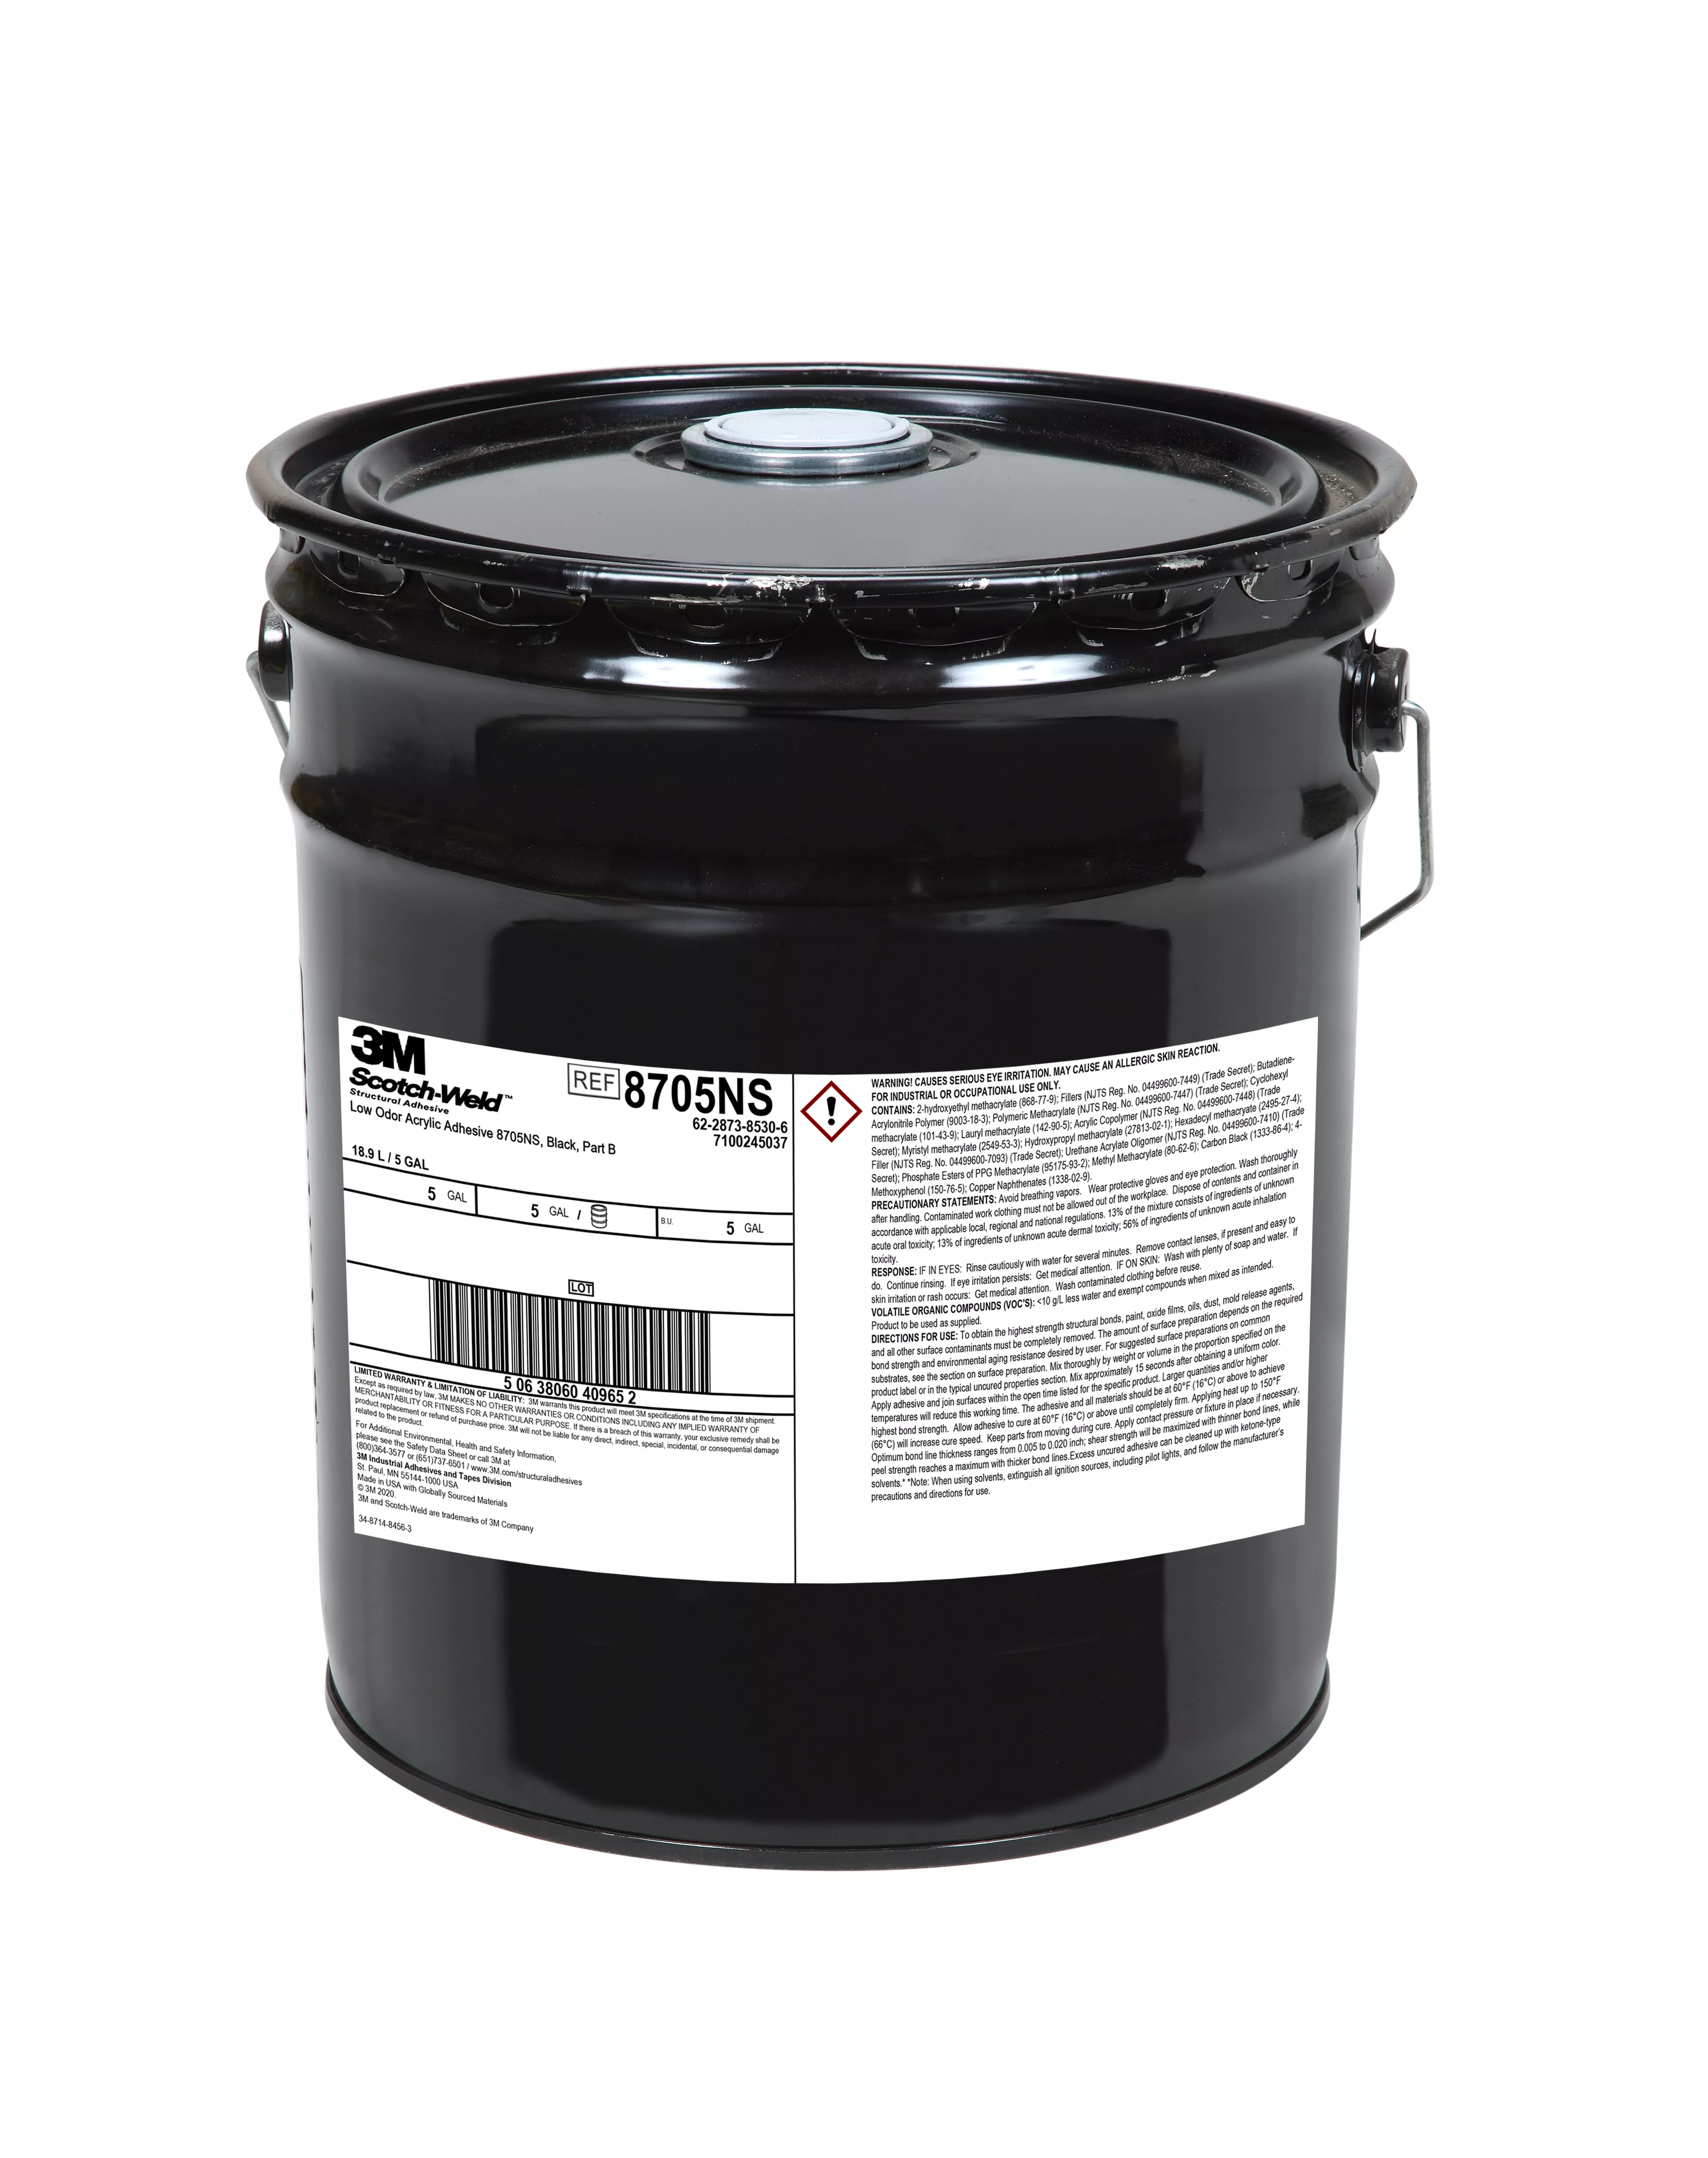 3M™ Scotch-Weld™ Low Odor Acrylic Adhesive 8705NS, Black, Part B, 5
Gallon (Pail), Drum